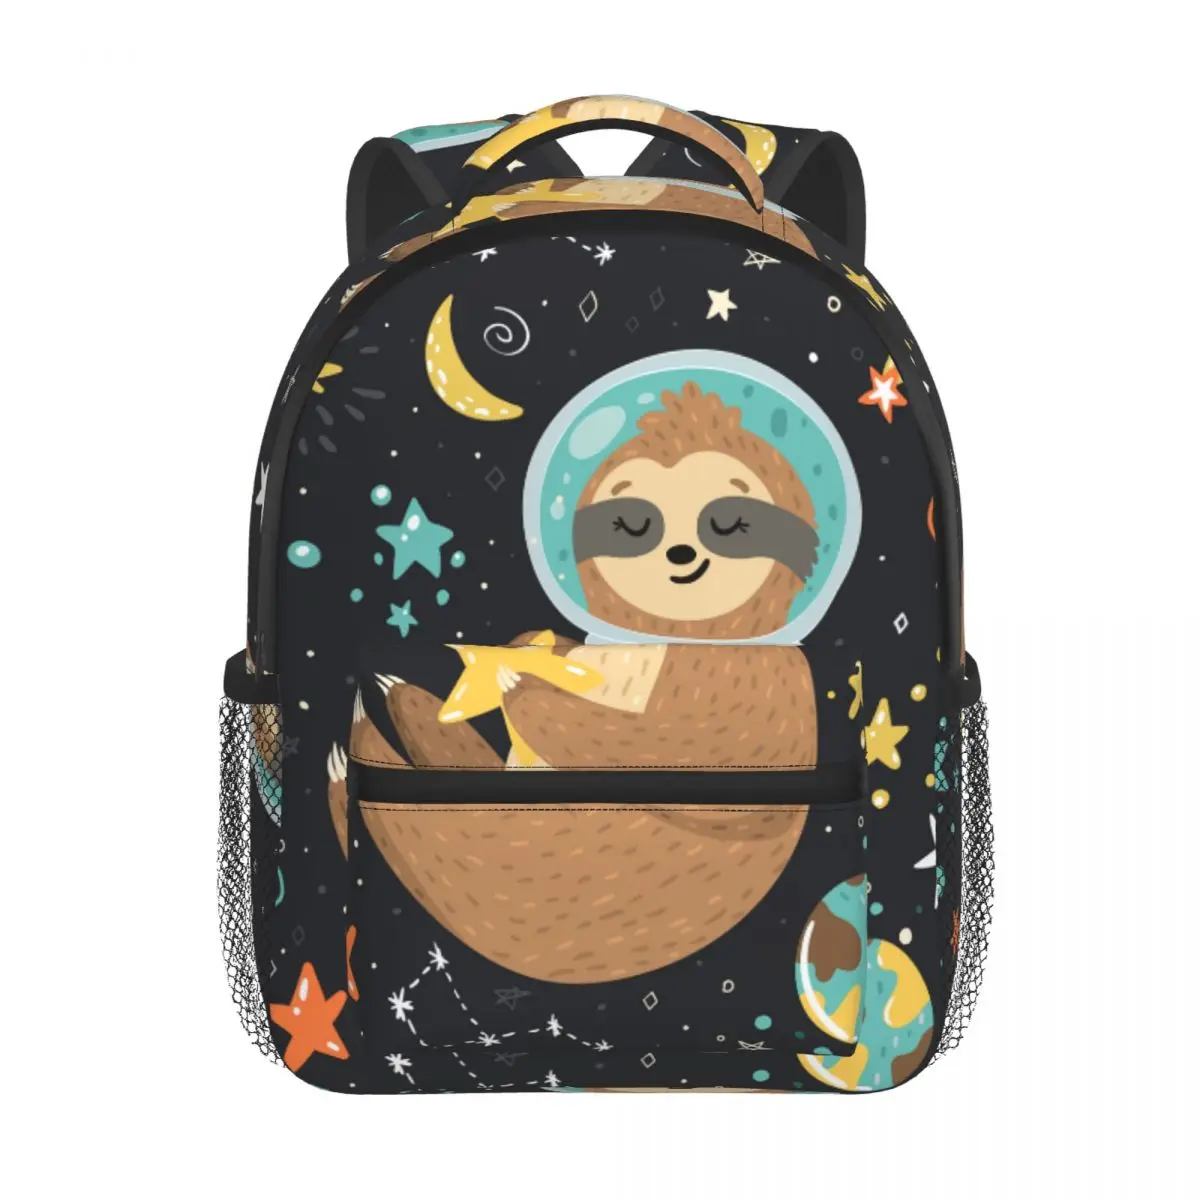 2022 Children Backpack Toddler Kids School Bag Smiling Cute Baby Sloth Astronaut Holding Star Kindergarten Bag for Girl Boys